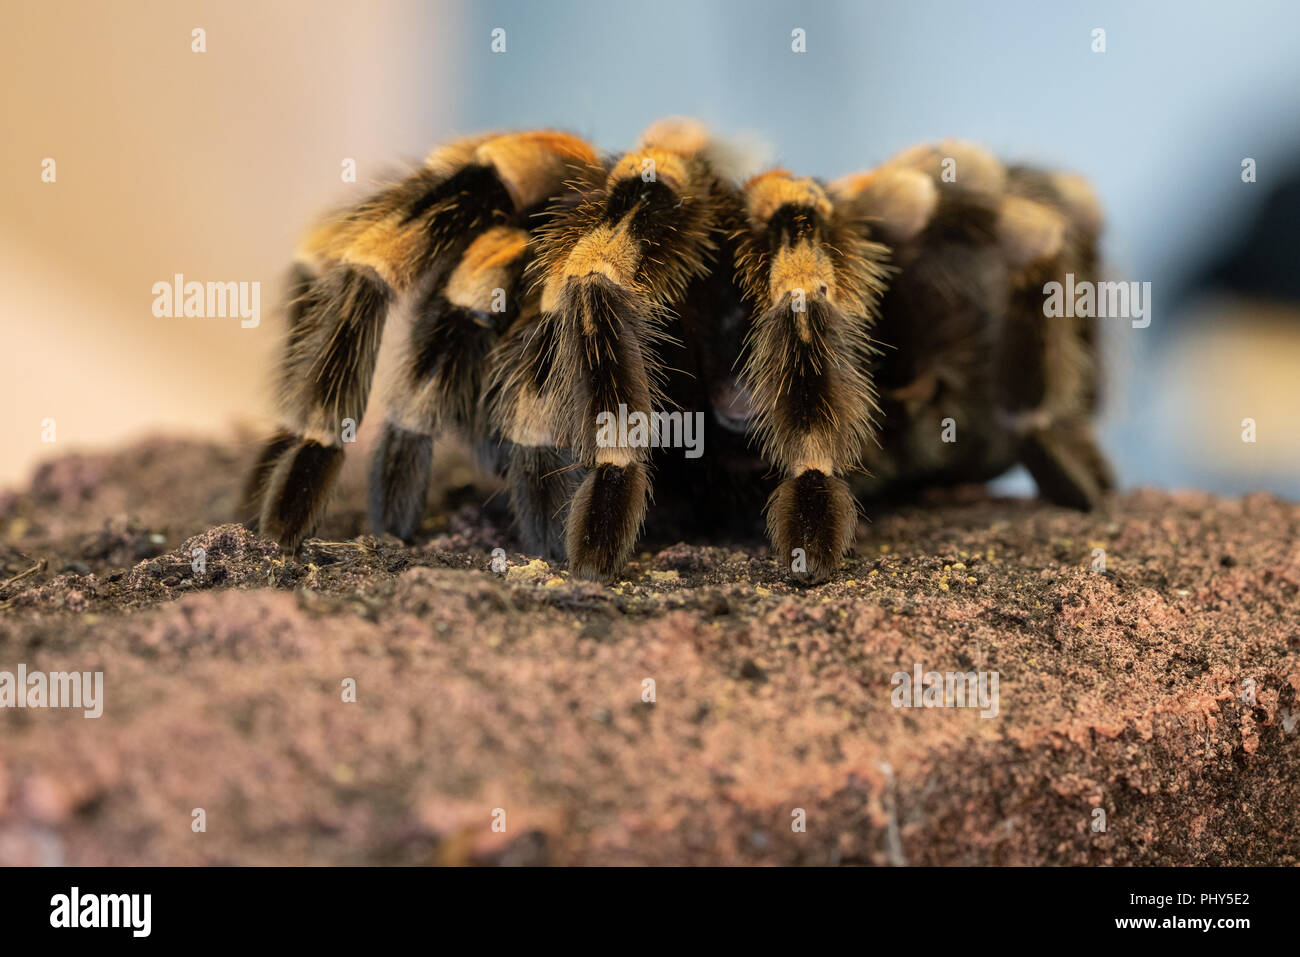 Close up of a Mexican redknee tarantula (Brachypelma smithi) on a stone Stock Photo